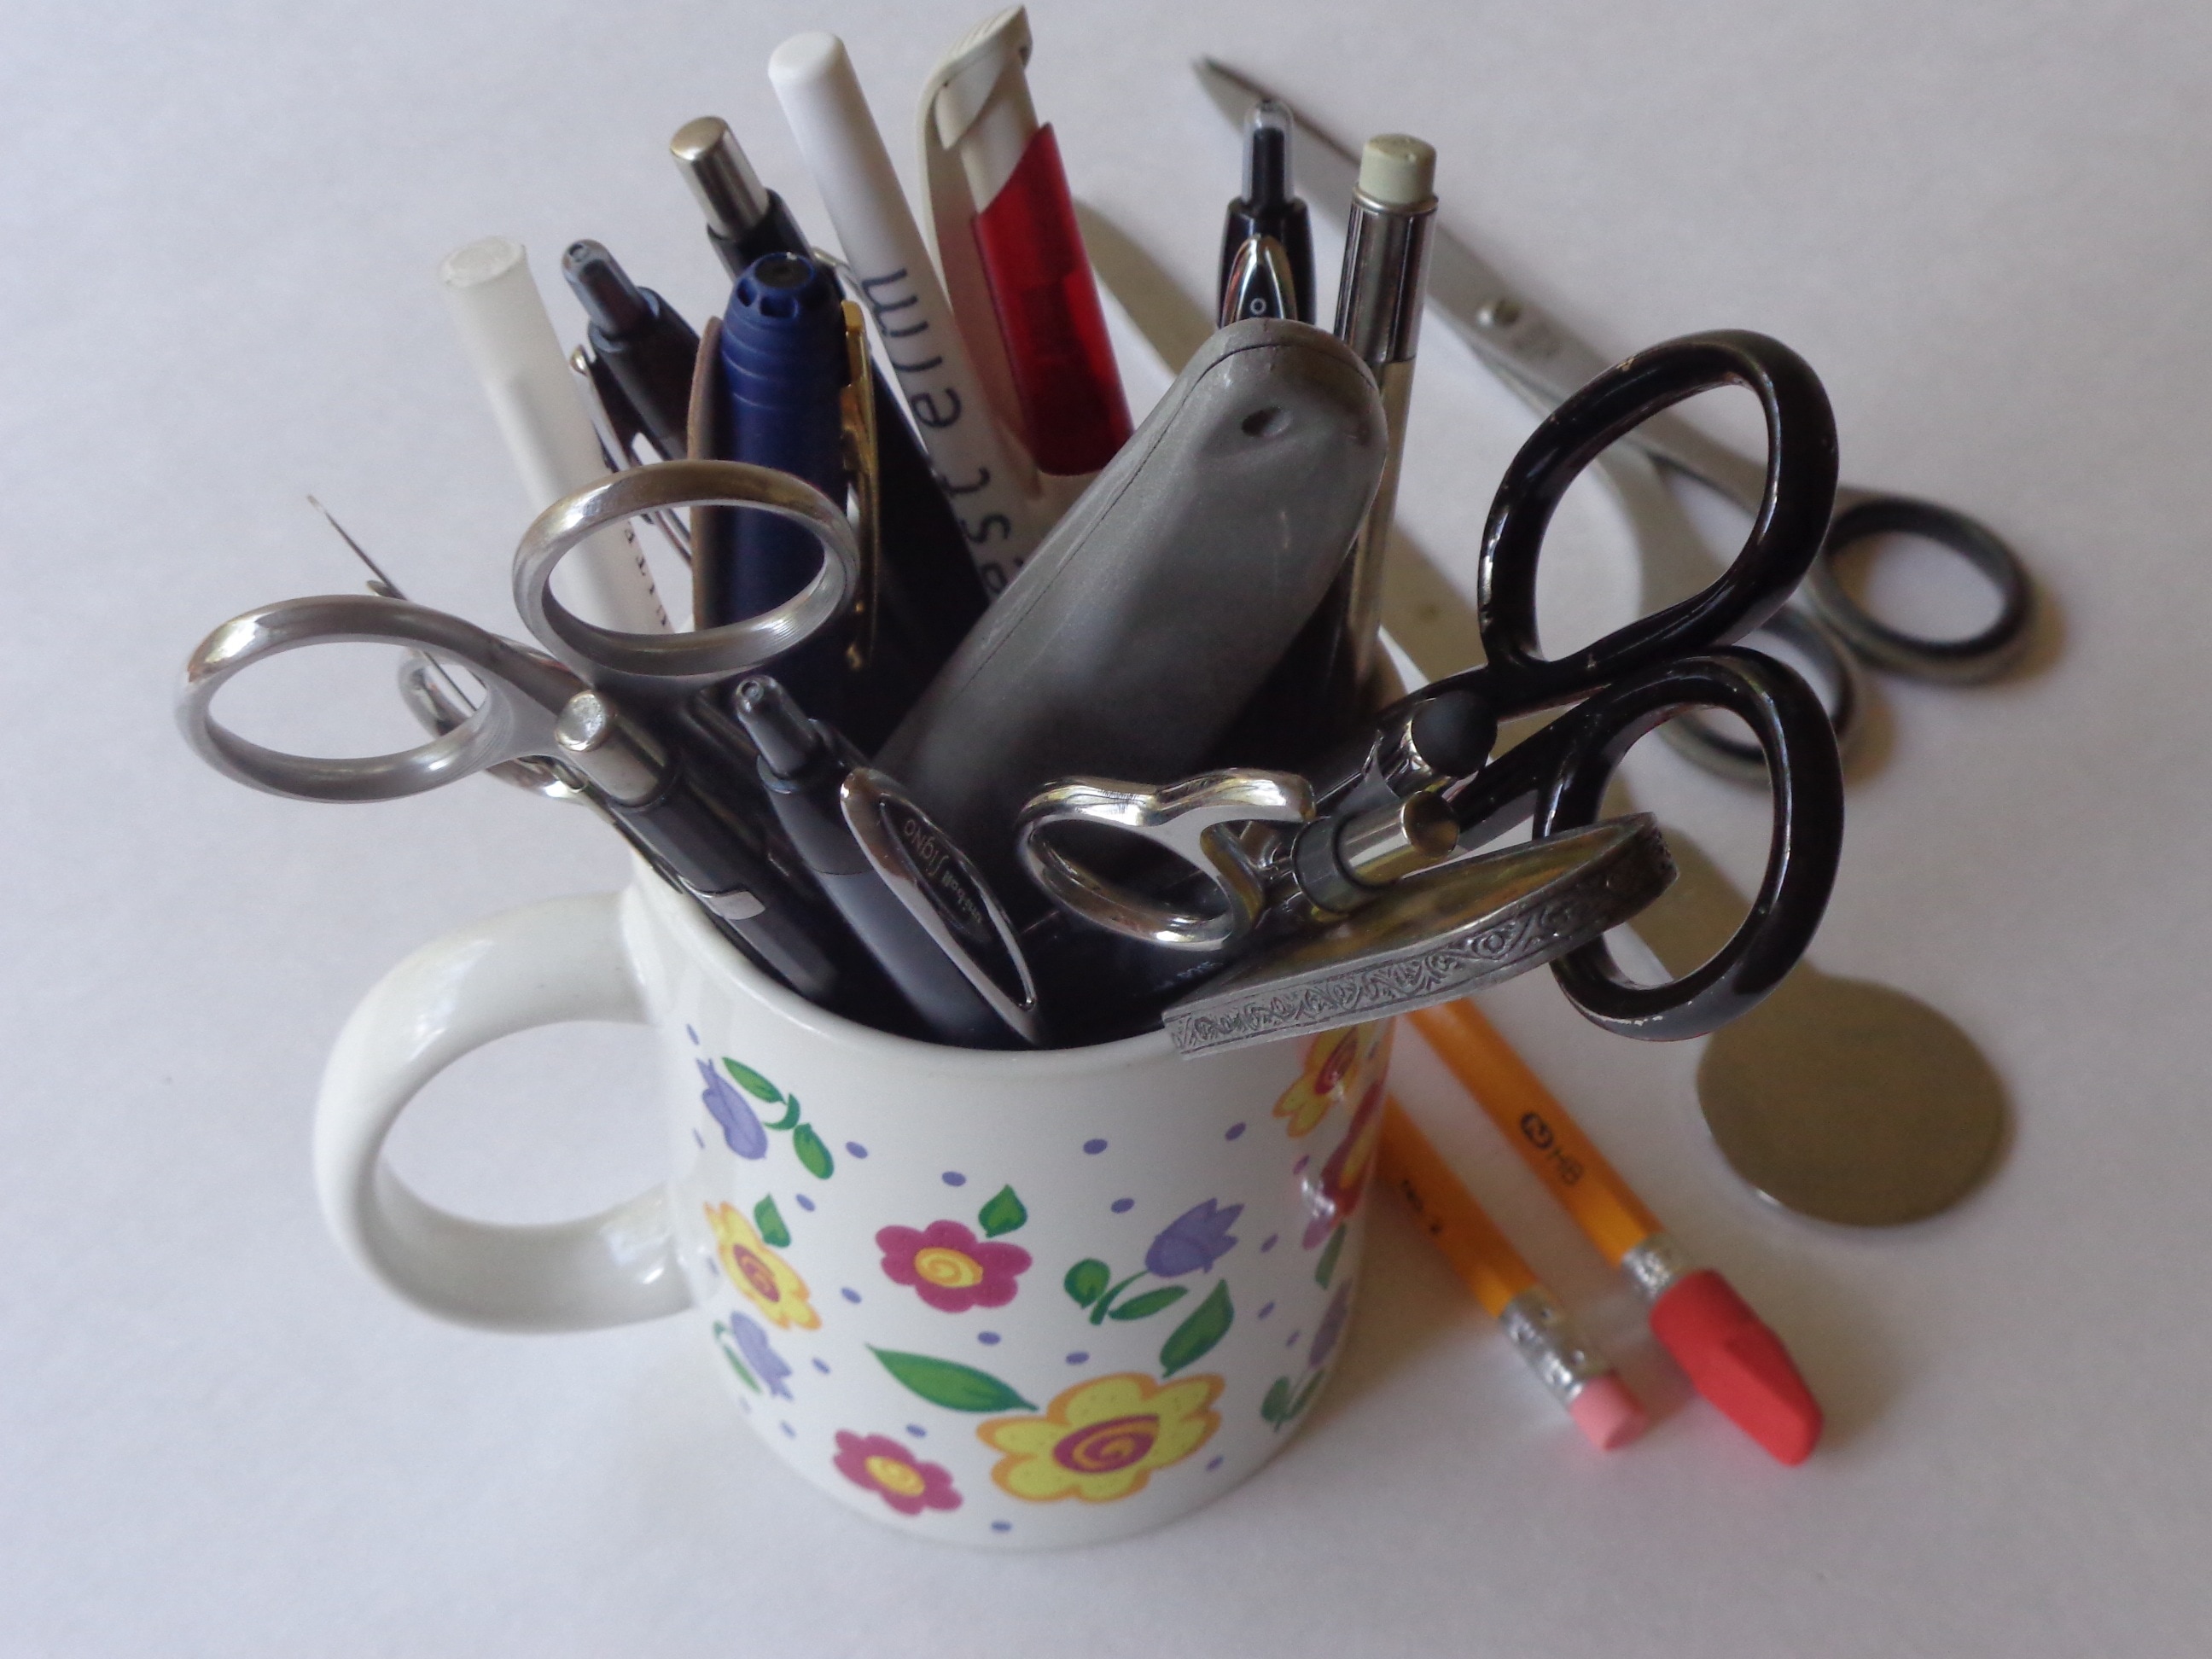 scissors, pens and pencils on ceramic mug